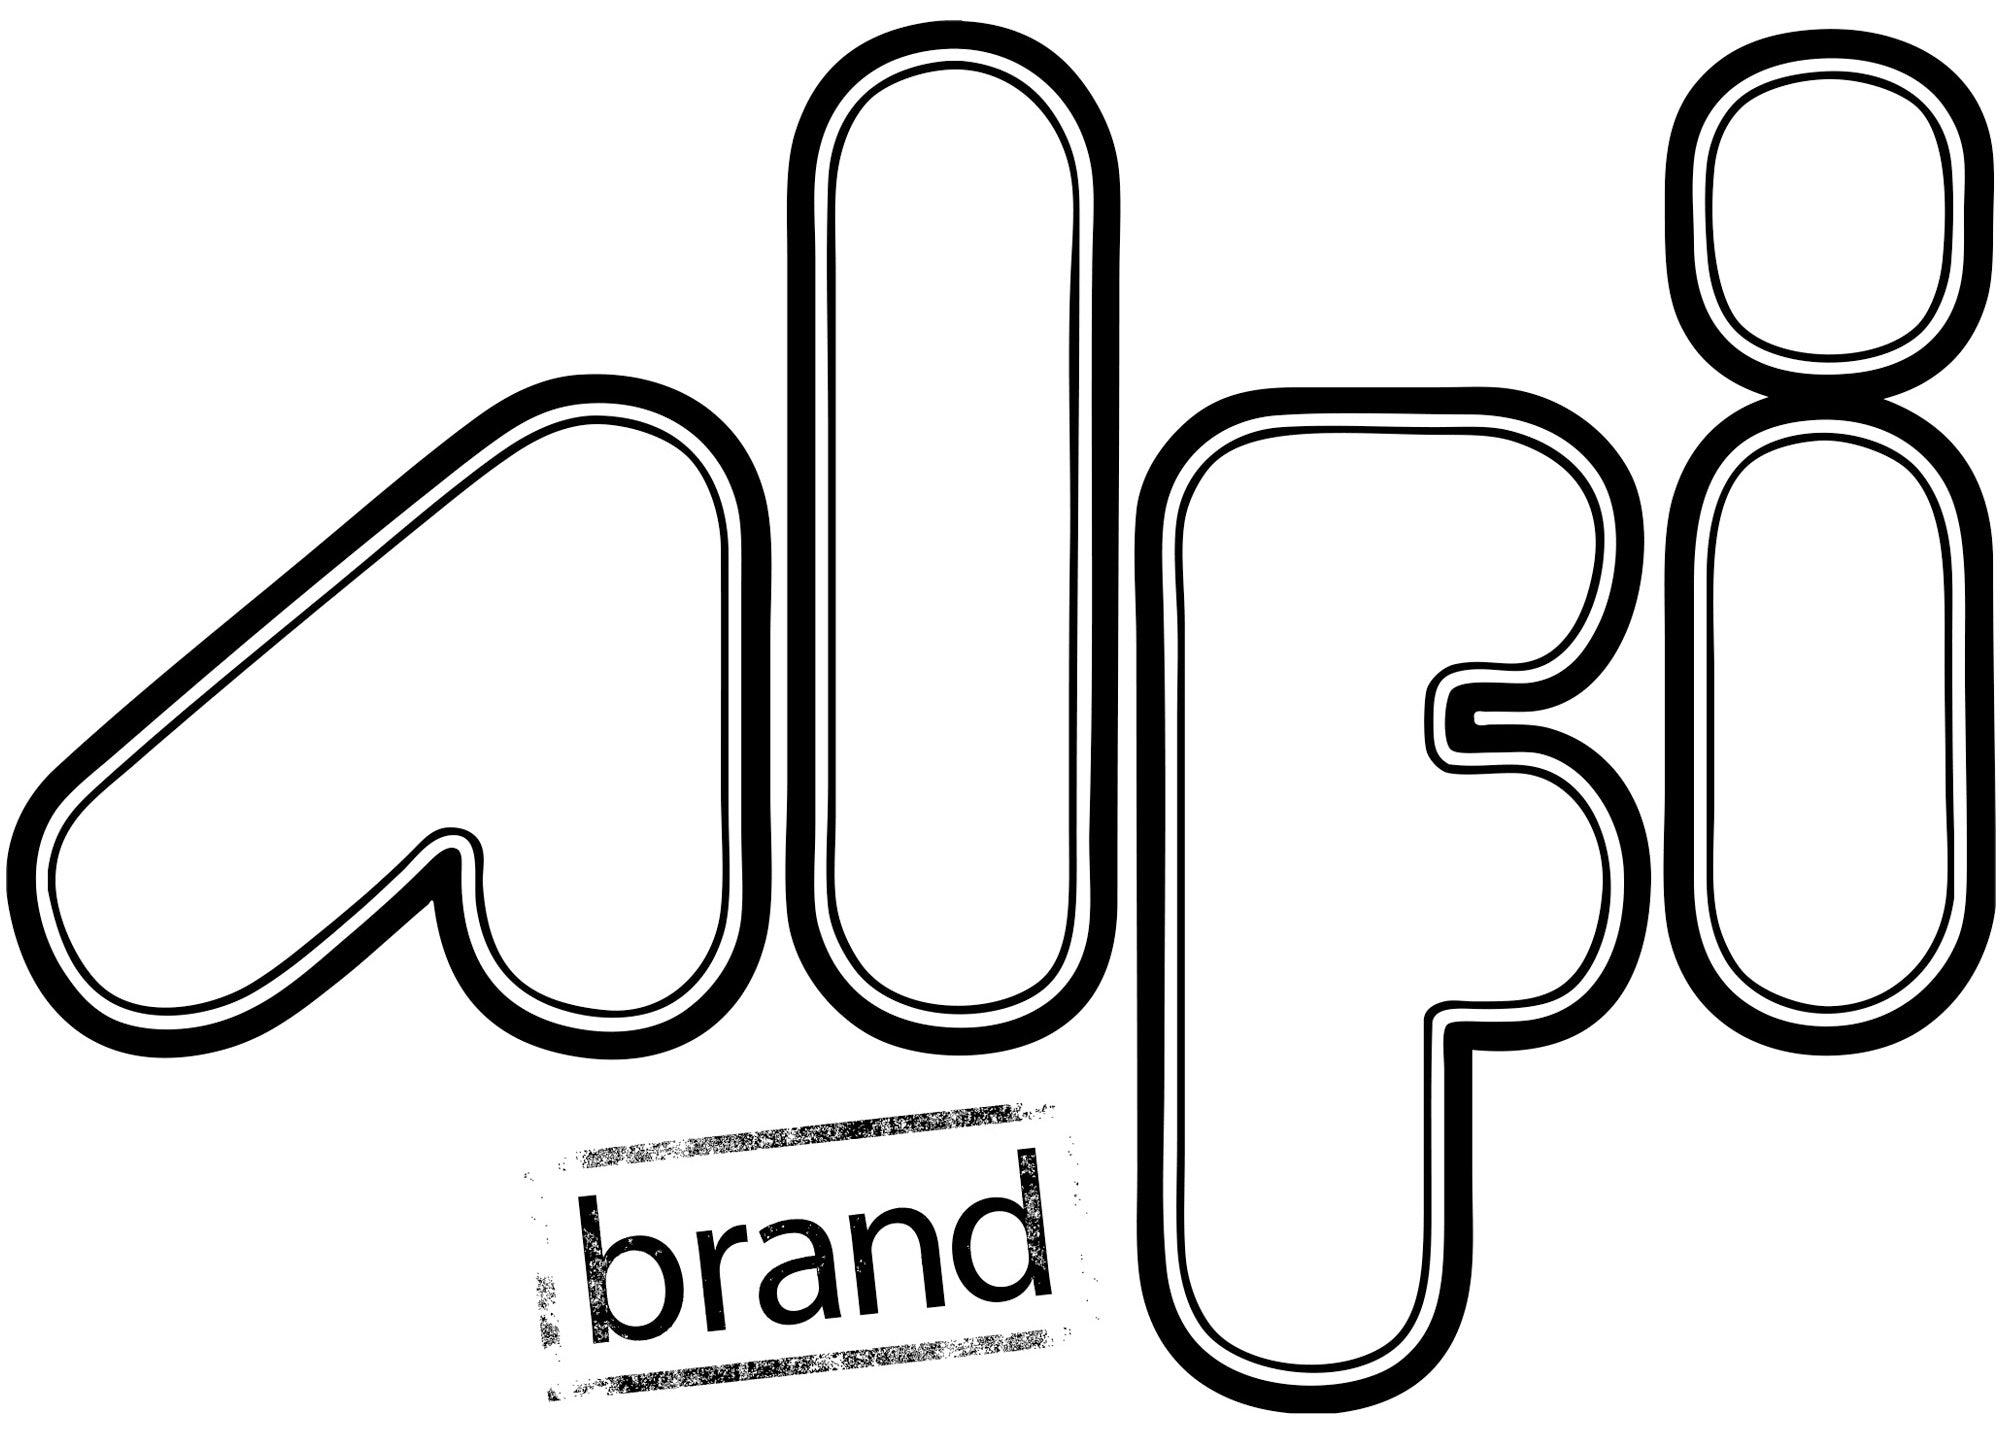 ALFI Brand - Black Matte 15" Round Solid Surface Resin Sink | ABRS15RBM